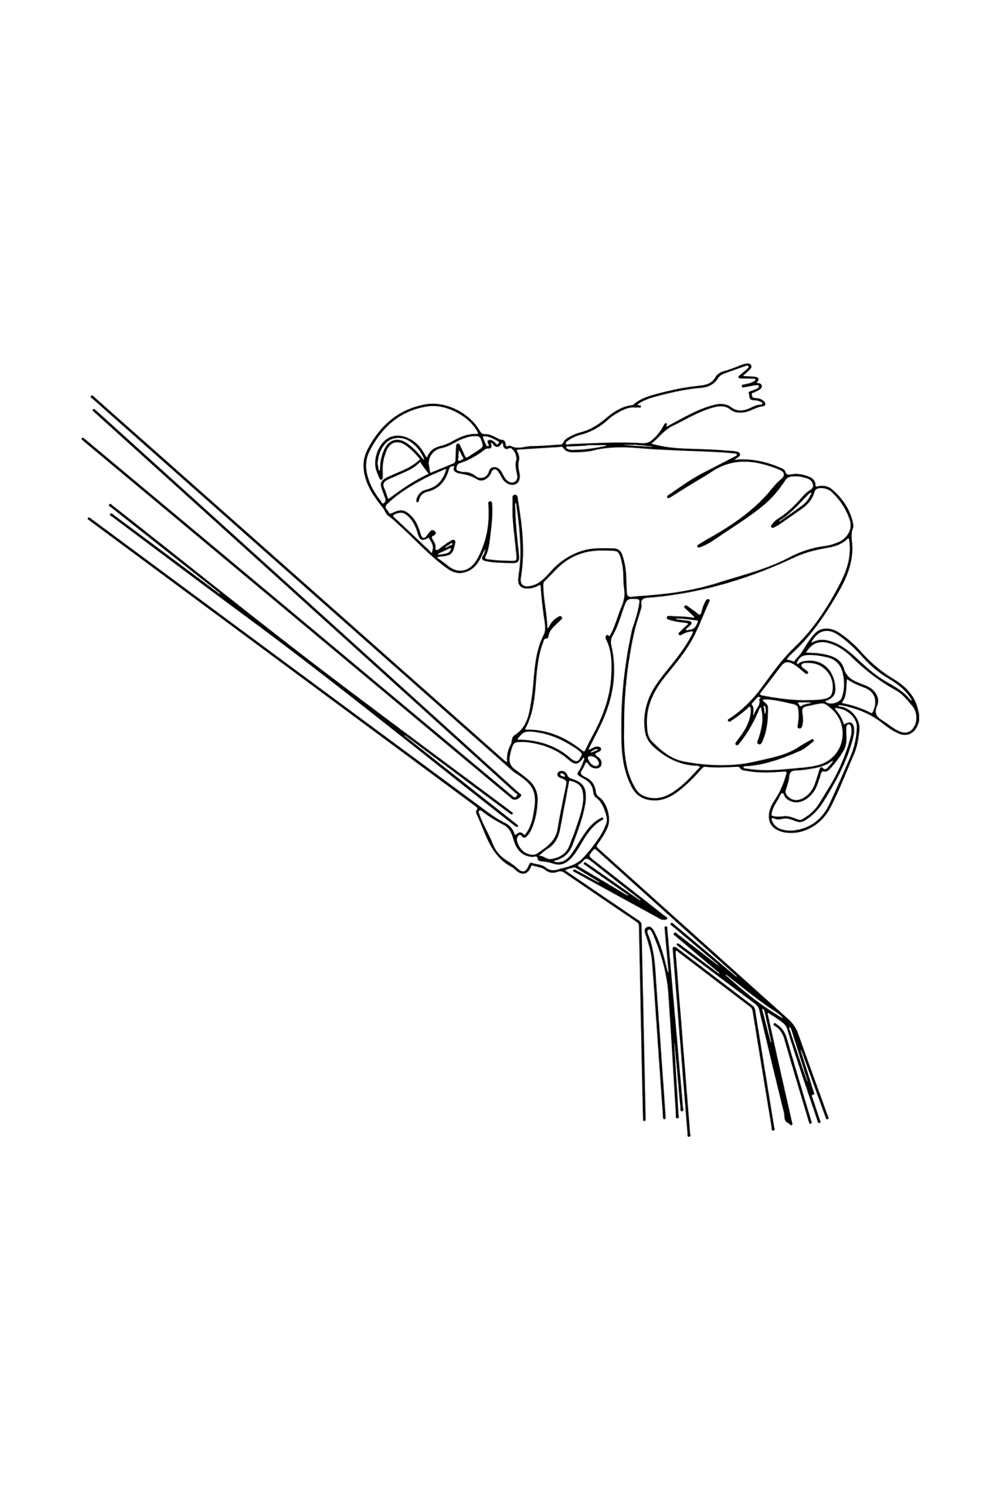 Parkour Jump Silhouette: One-Line Illustration for Dynamic Action, Street Dynamo One-Line Sketch: Man Parkour Jumping Vector, Street Dynamo's One-Line Parkour Jump pinterest preview image.